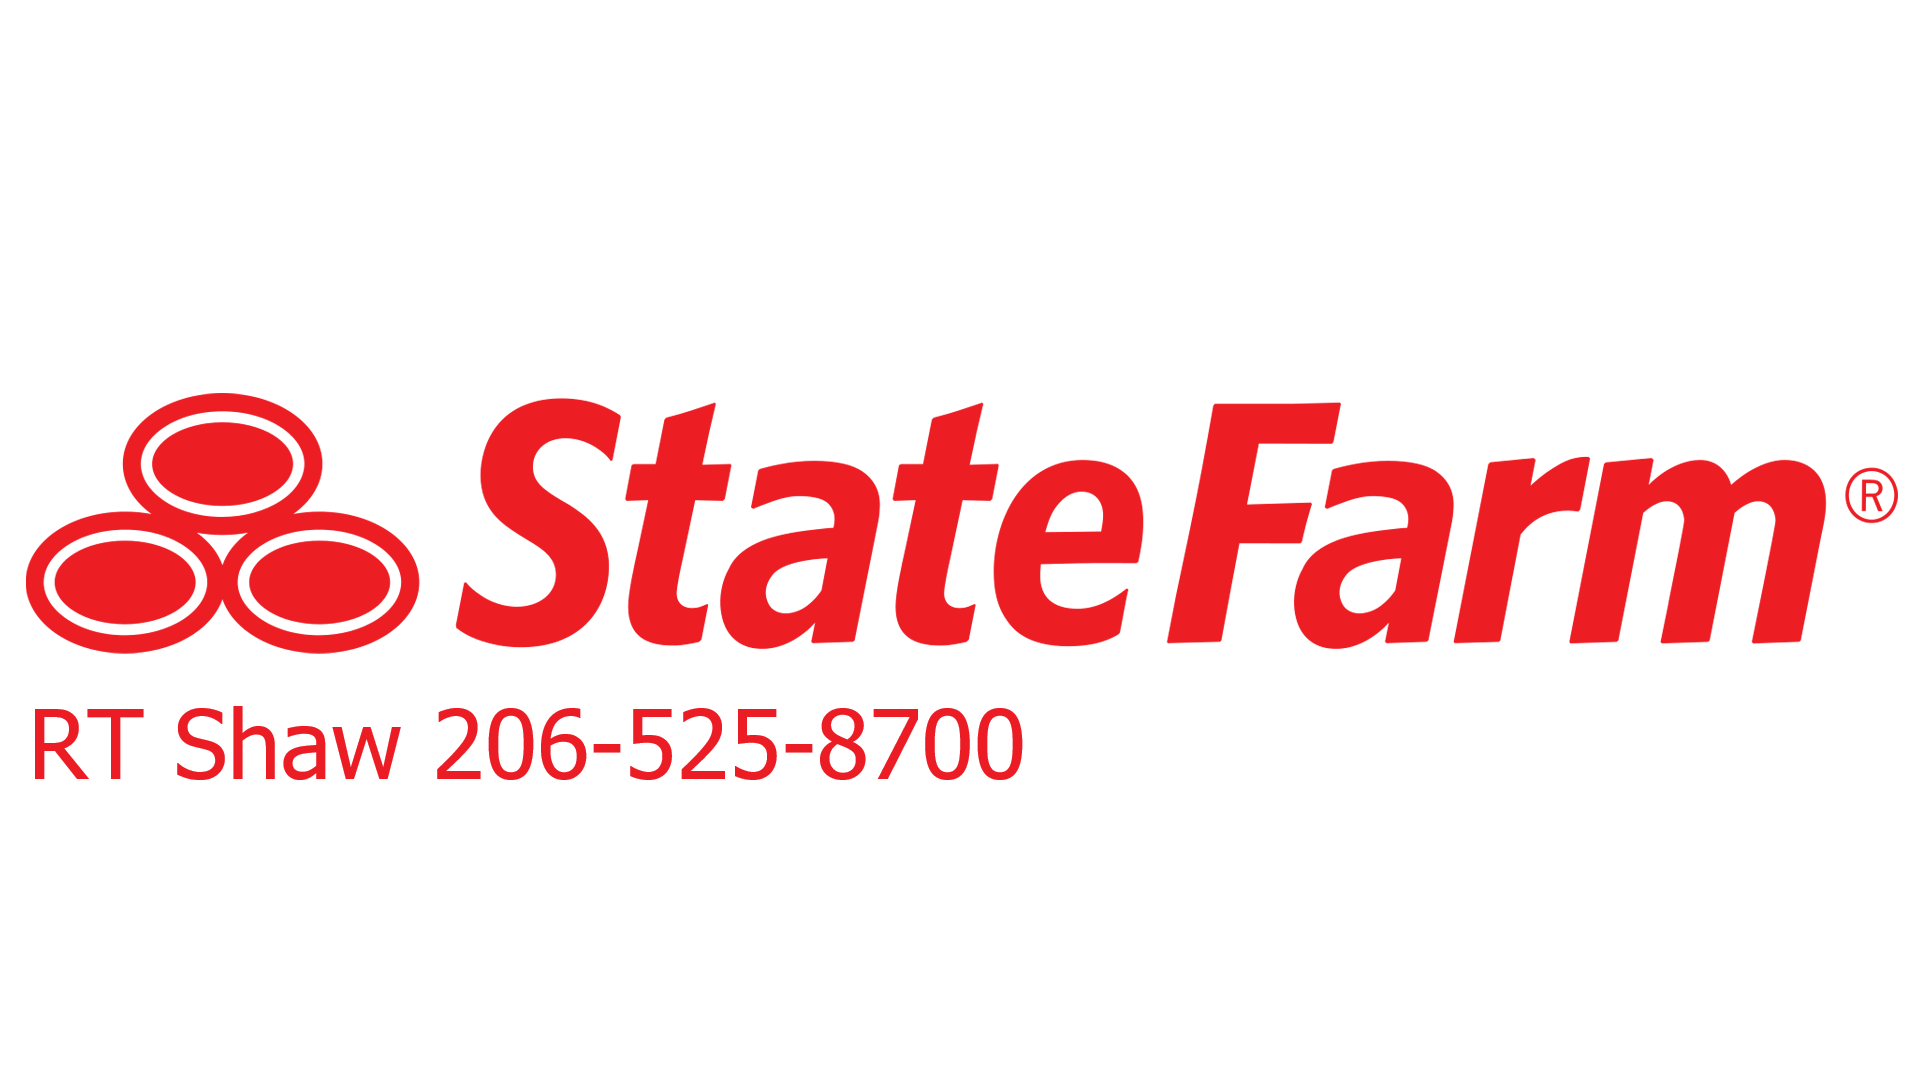 State-Farm-Logo with Name (1)